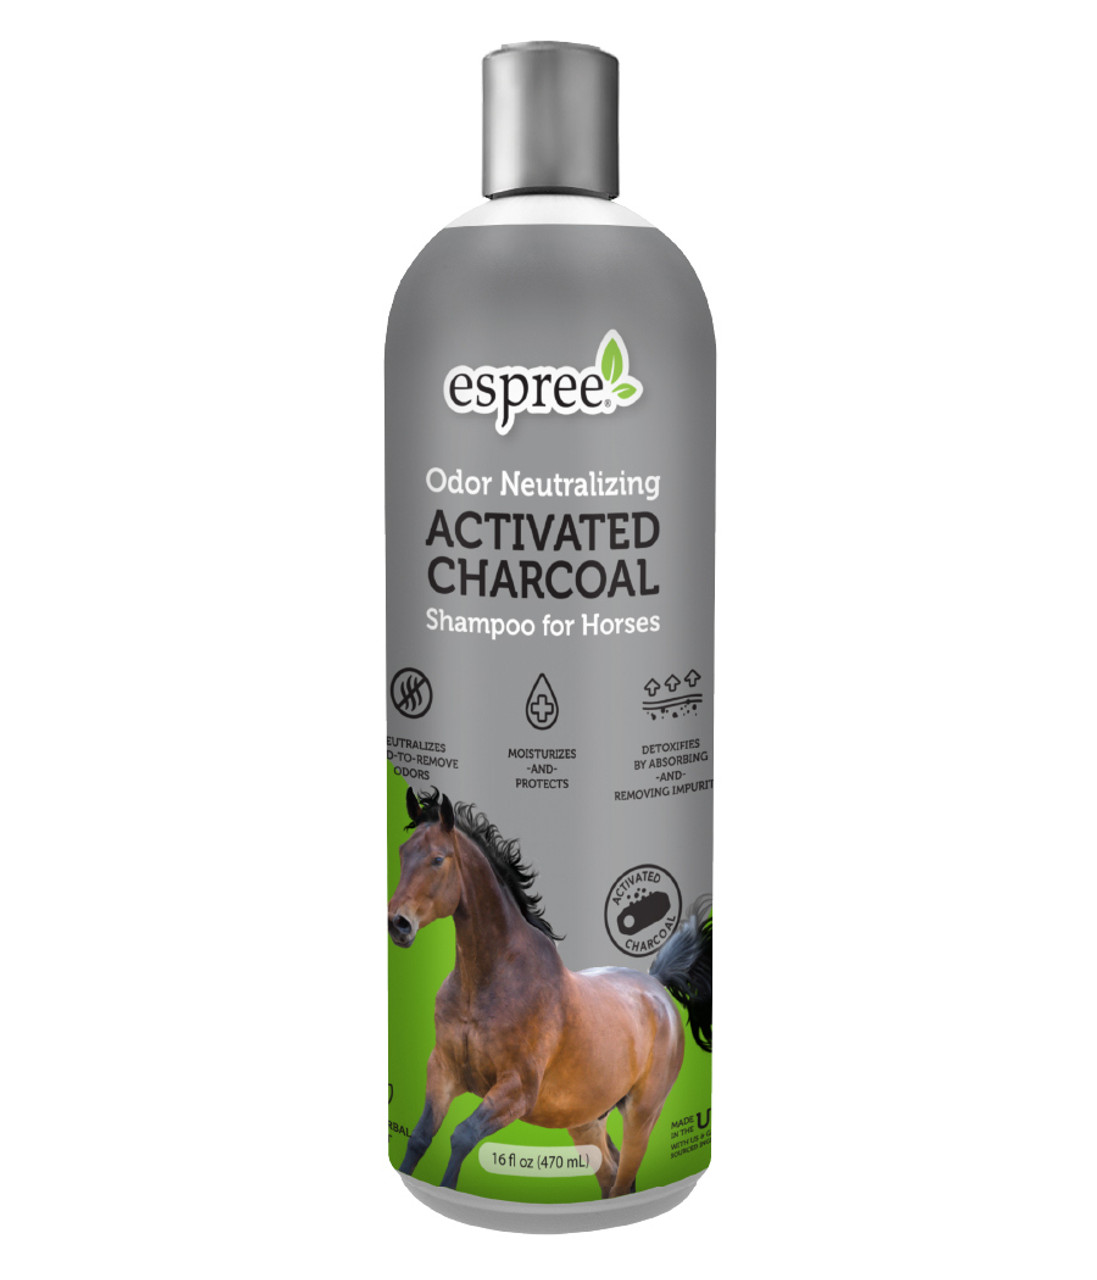 Espree Activated Charcoal Shampoo for Horses- Equine Shampoo